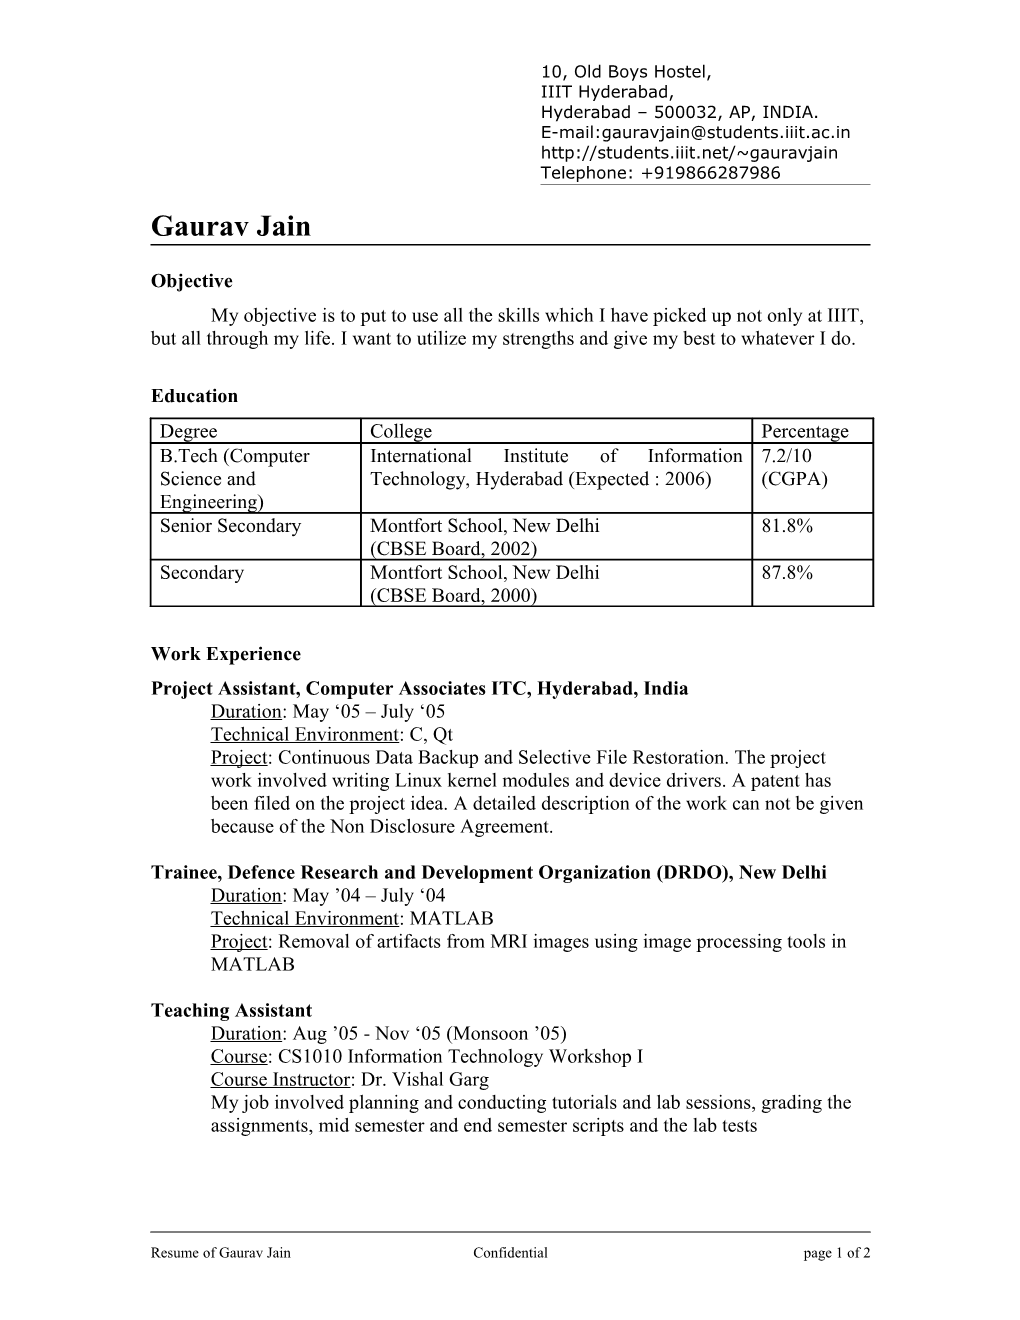 Resume of Gaurav Jain